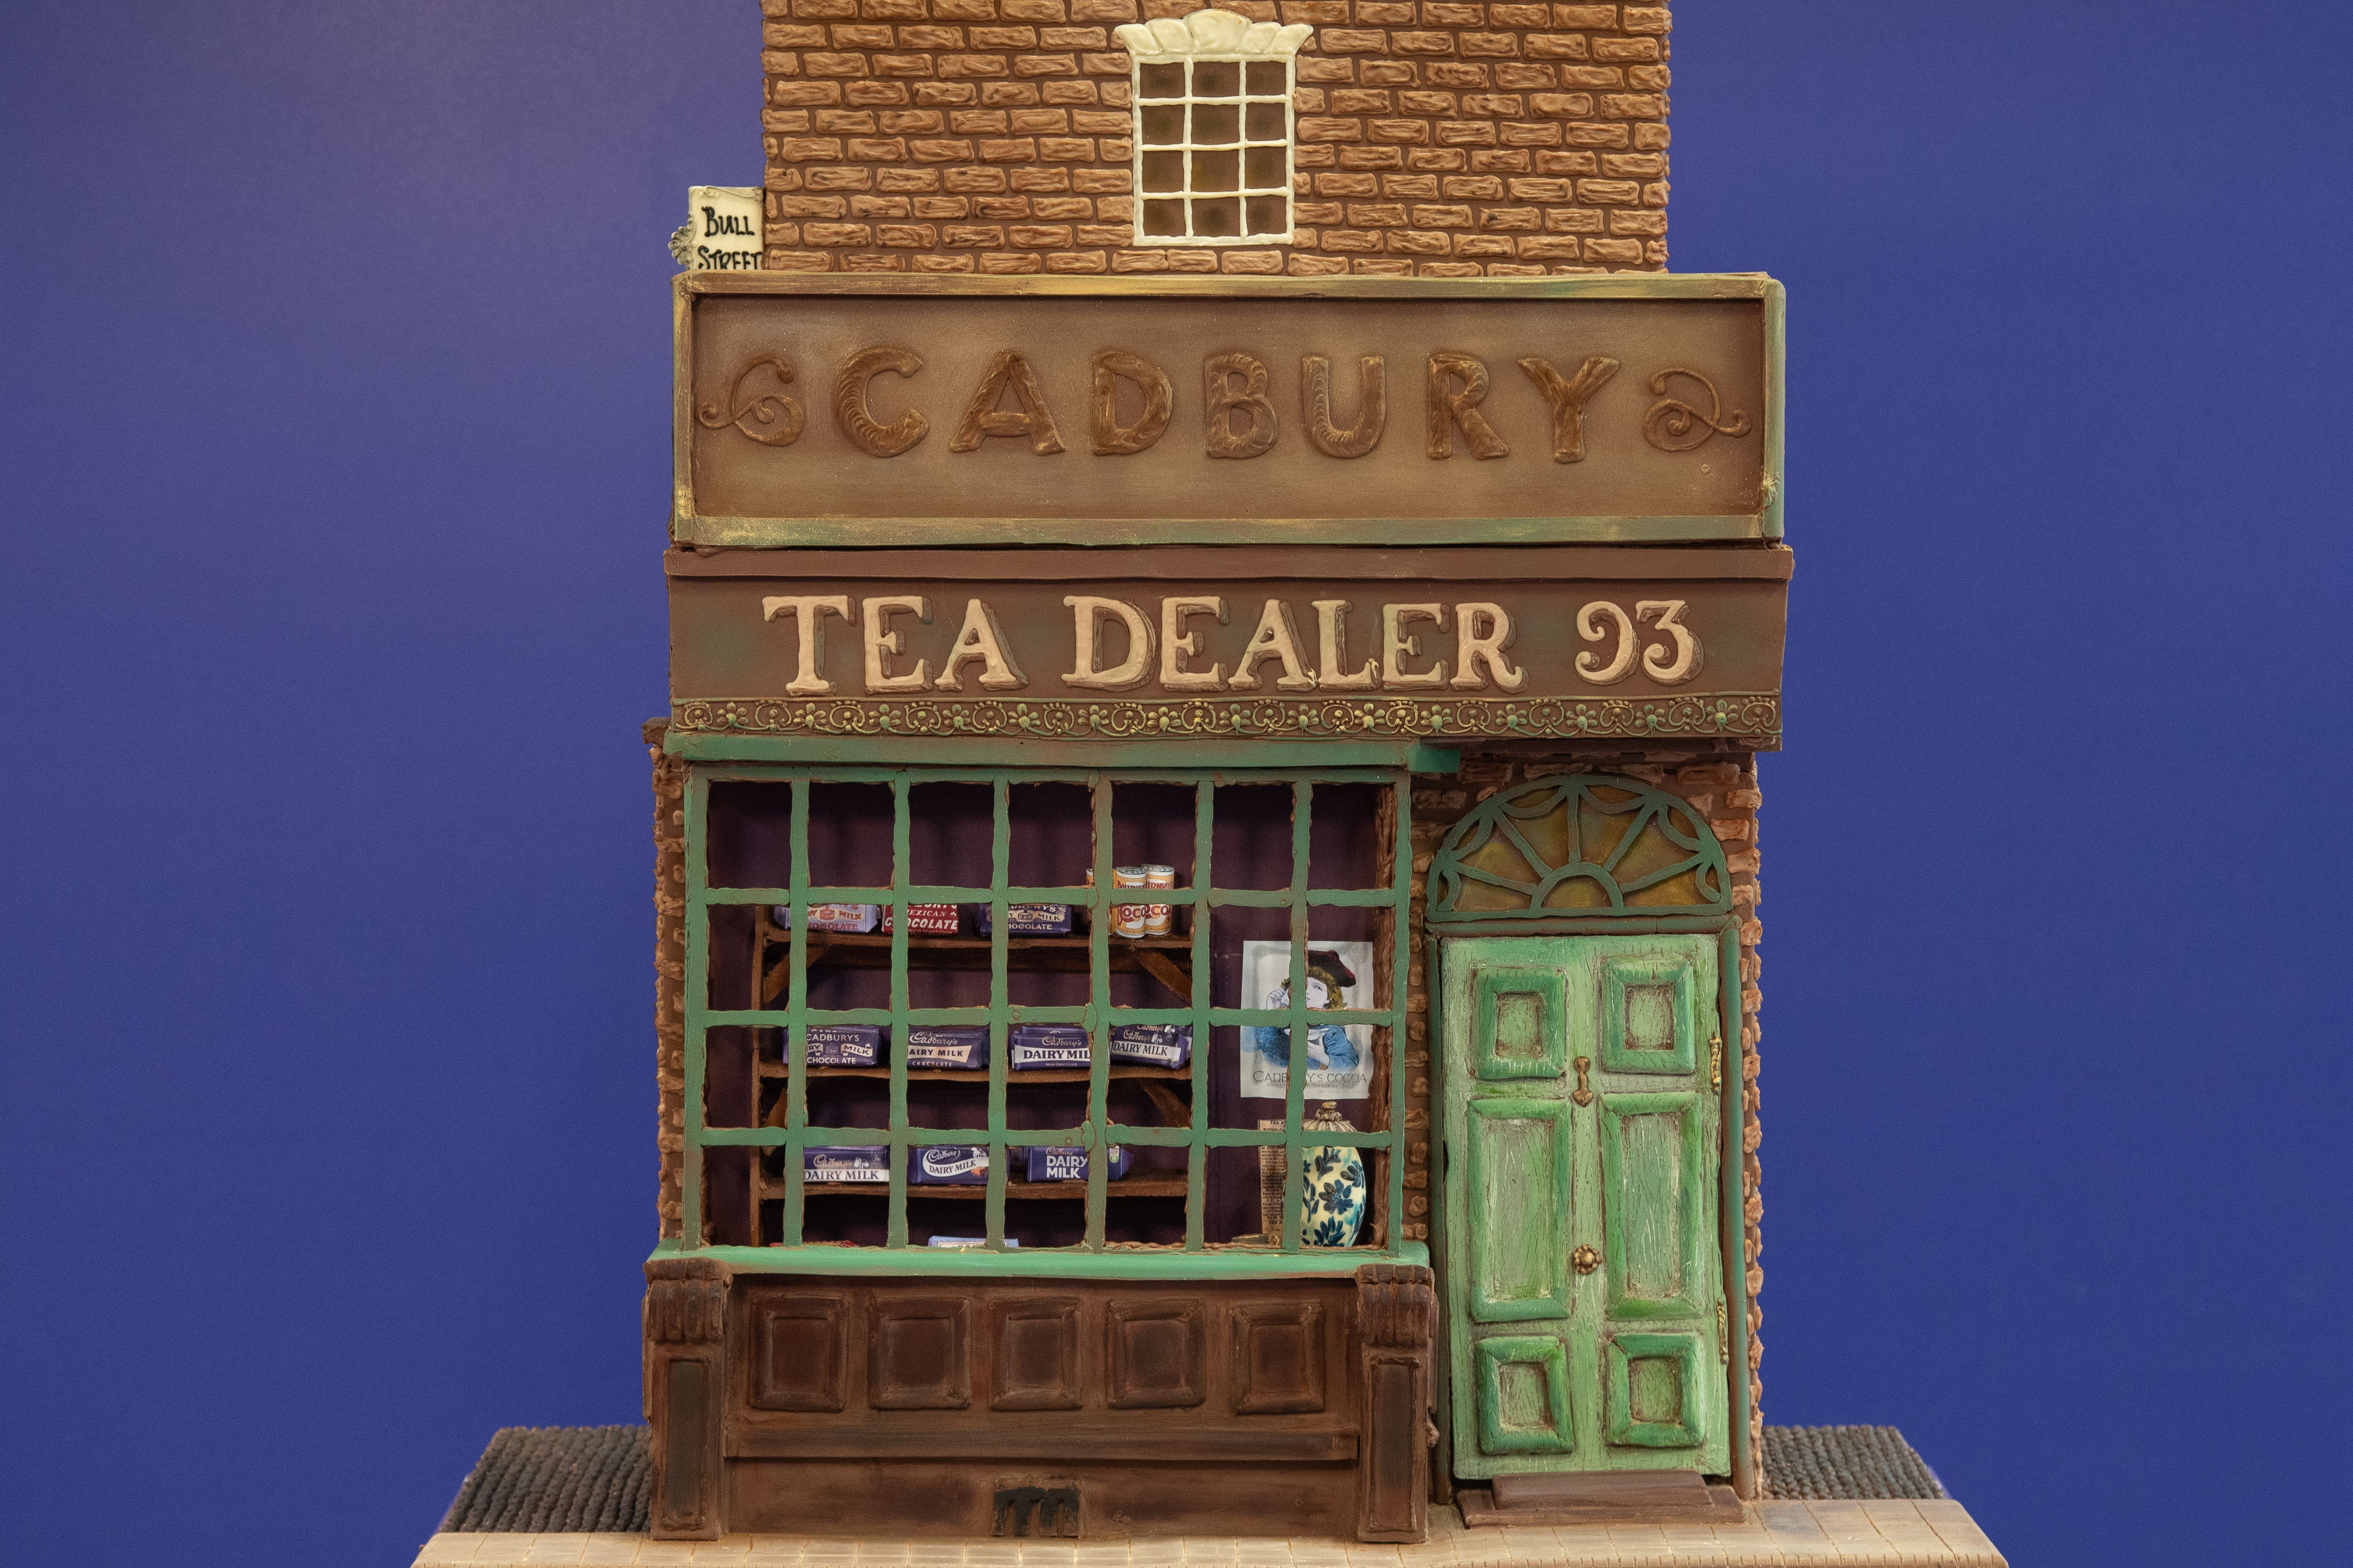 Cadbury World have unveiled a recreation of the original 1824 Bull Street shop made purely out of Cadbury chocolate (Cadbury World/PA)